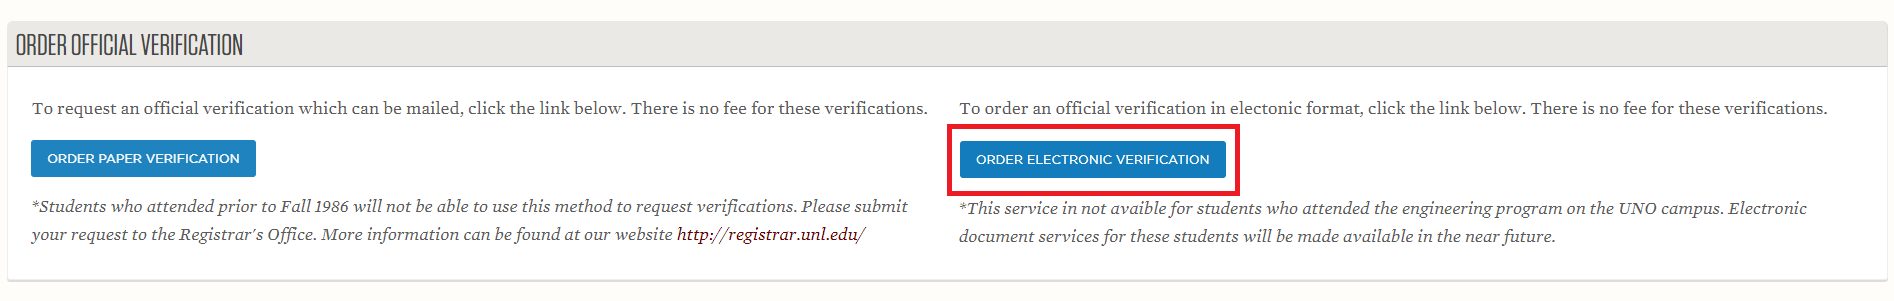 Order Electronic Verification